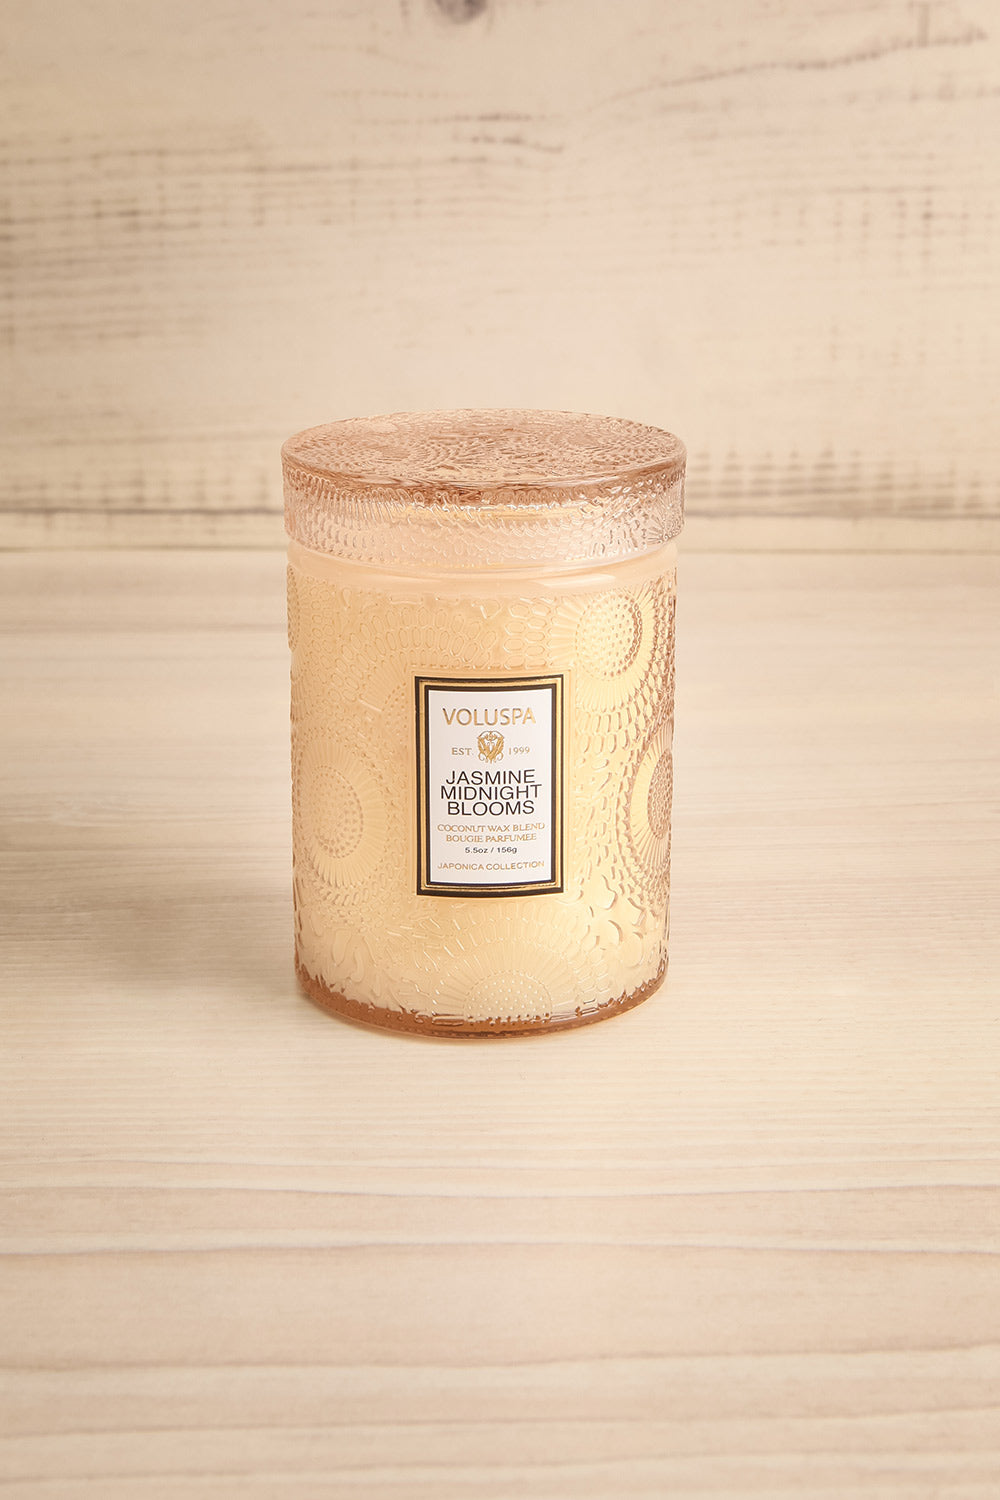 Jasmine Midnight Blooms Small Jar Candle by Voluspa | Maison garçonne